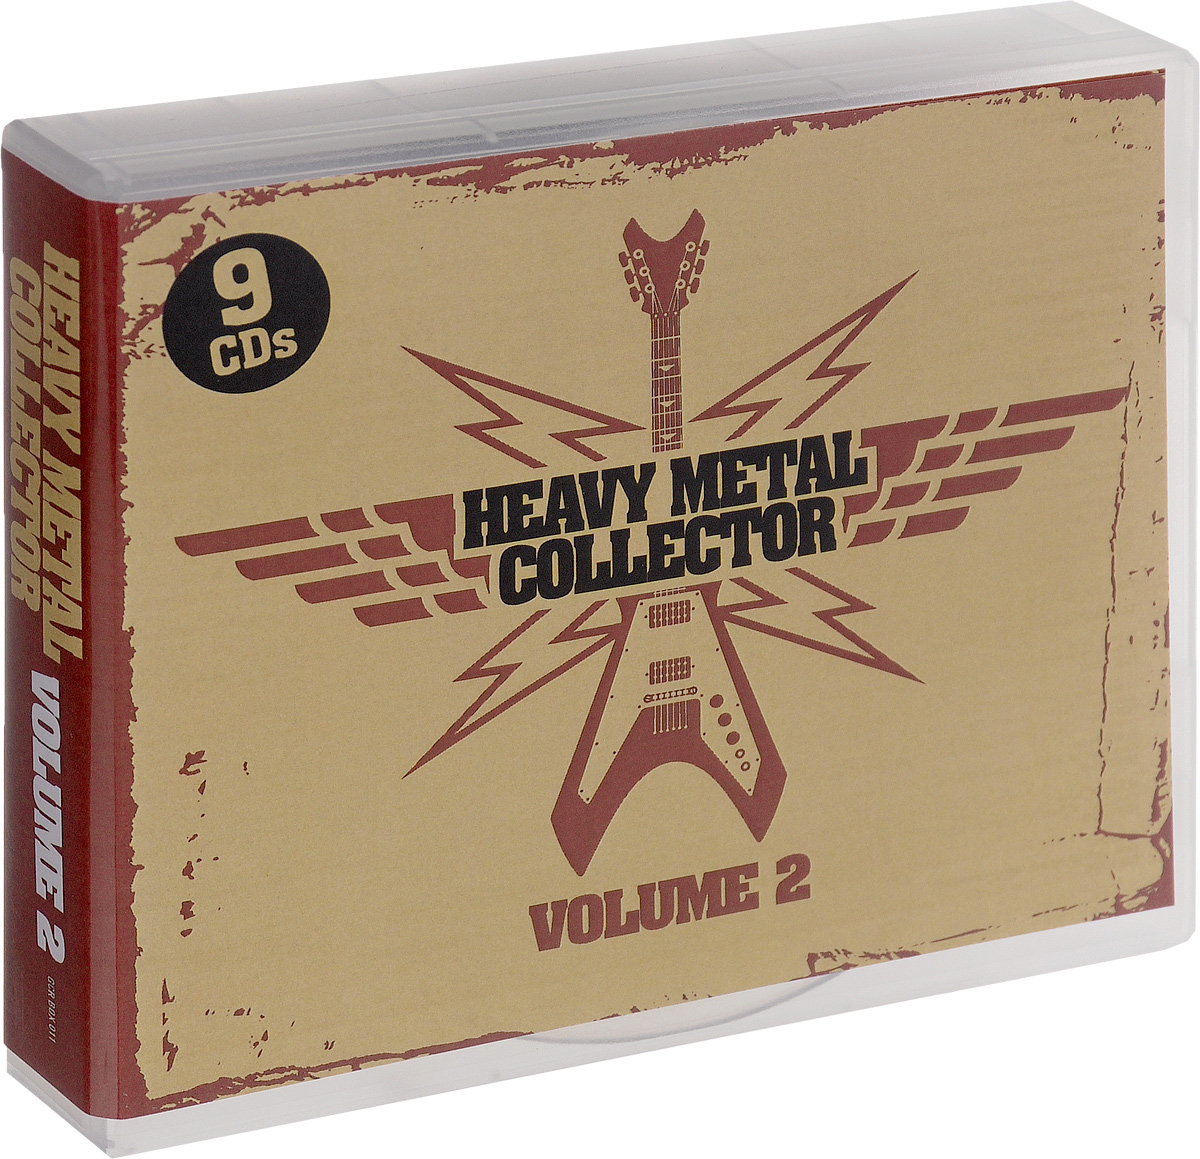 Heavy Metal Collector. Volume 2 (9 CD)